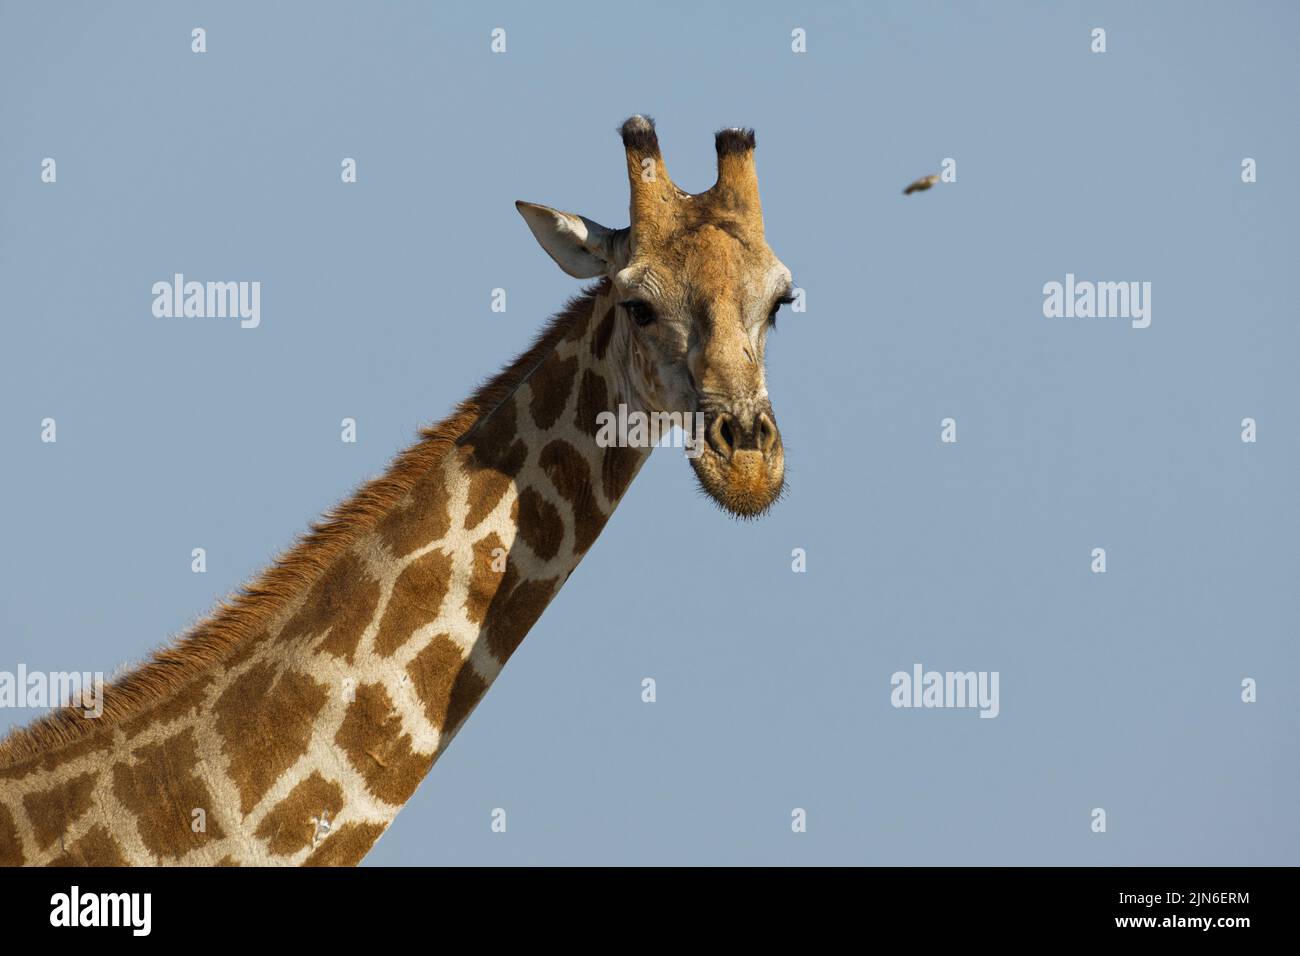 Angolan giraffe (Giraffa camelopardalis angolensis), adult, headshot against a blue sky, animal portrait, Etosha National Park, Namibia, Africa Stock Photo